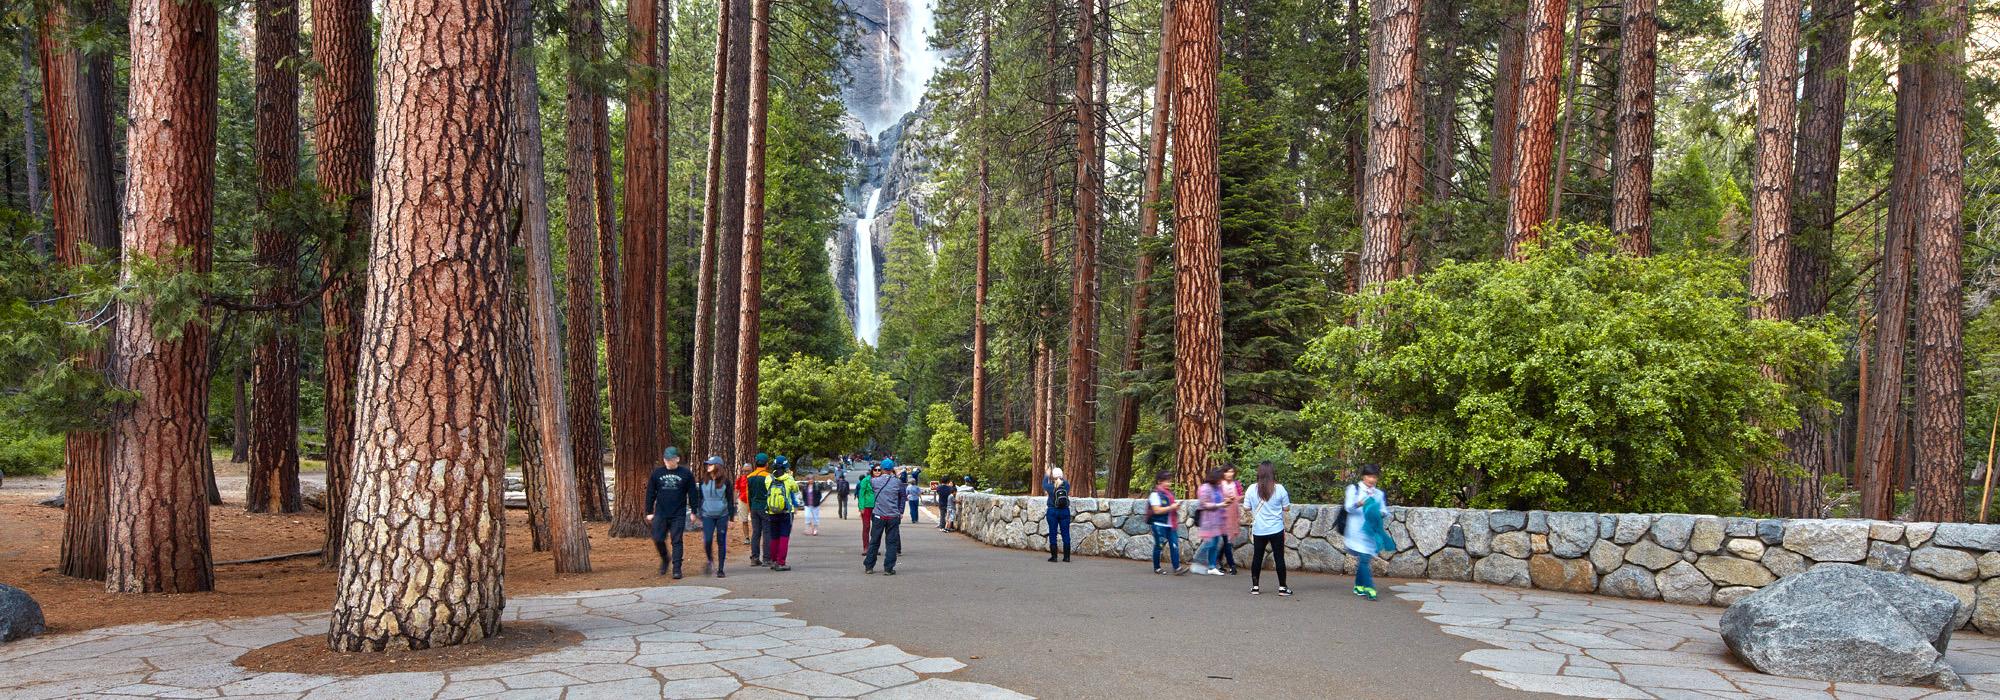 CA_YosemiteFallsCorridor_byPhillipBond_2016_Hero.jpg